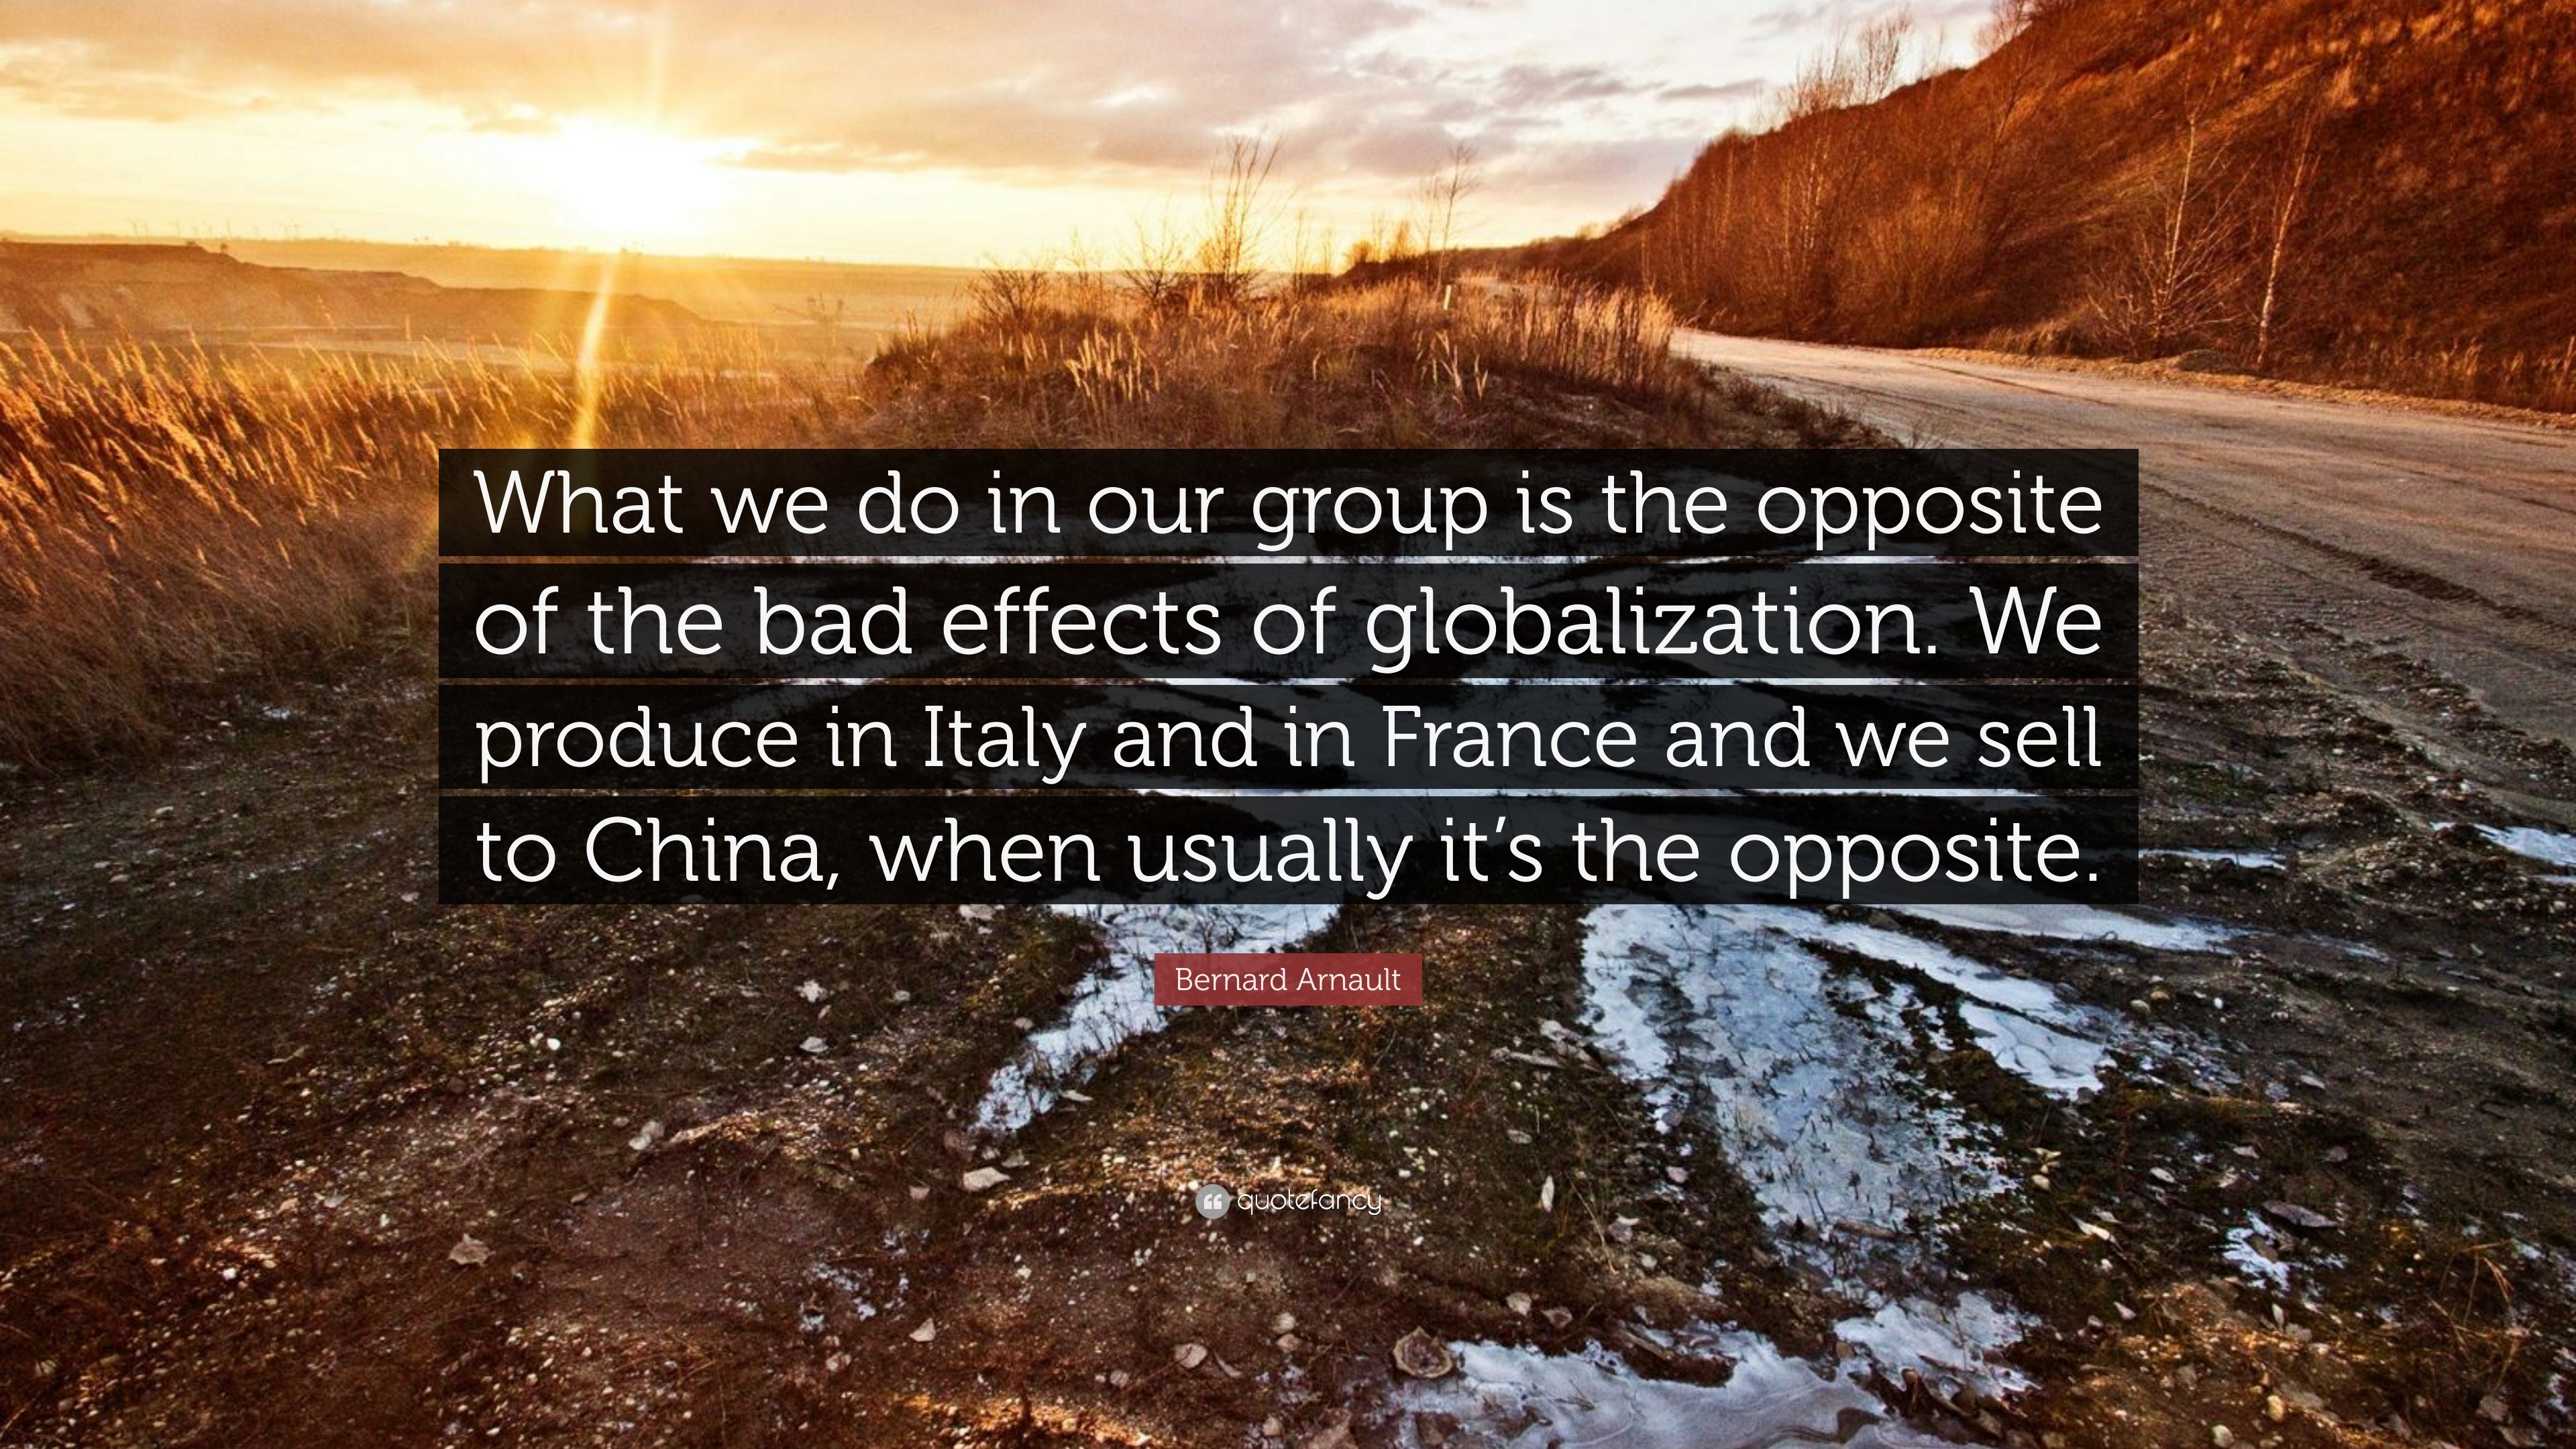 THE INTERNATIONAL MAGAZINE on X: Bernard Arnault Quotes Visit our